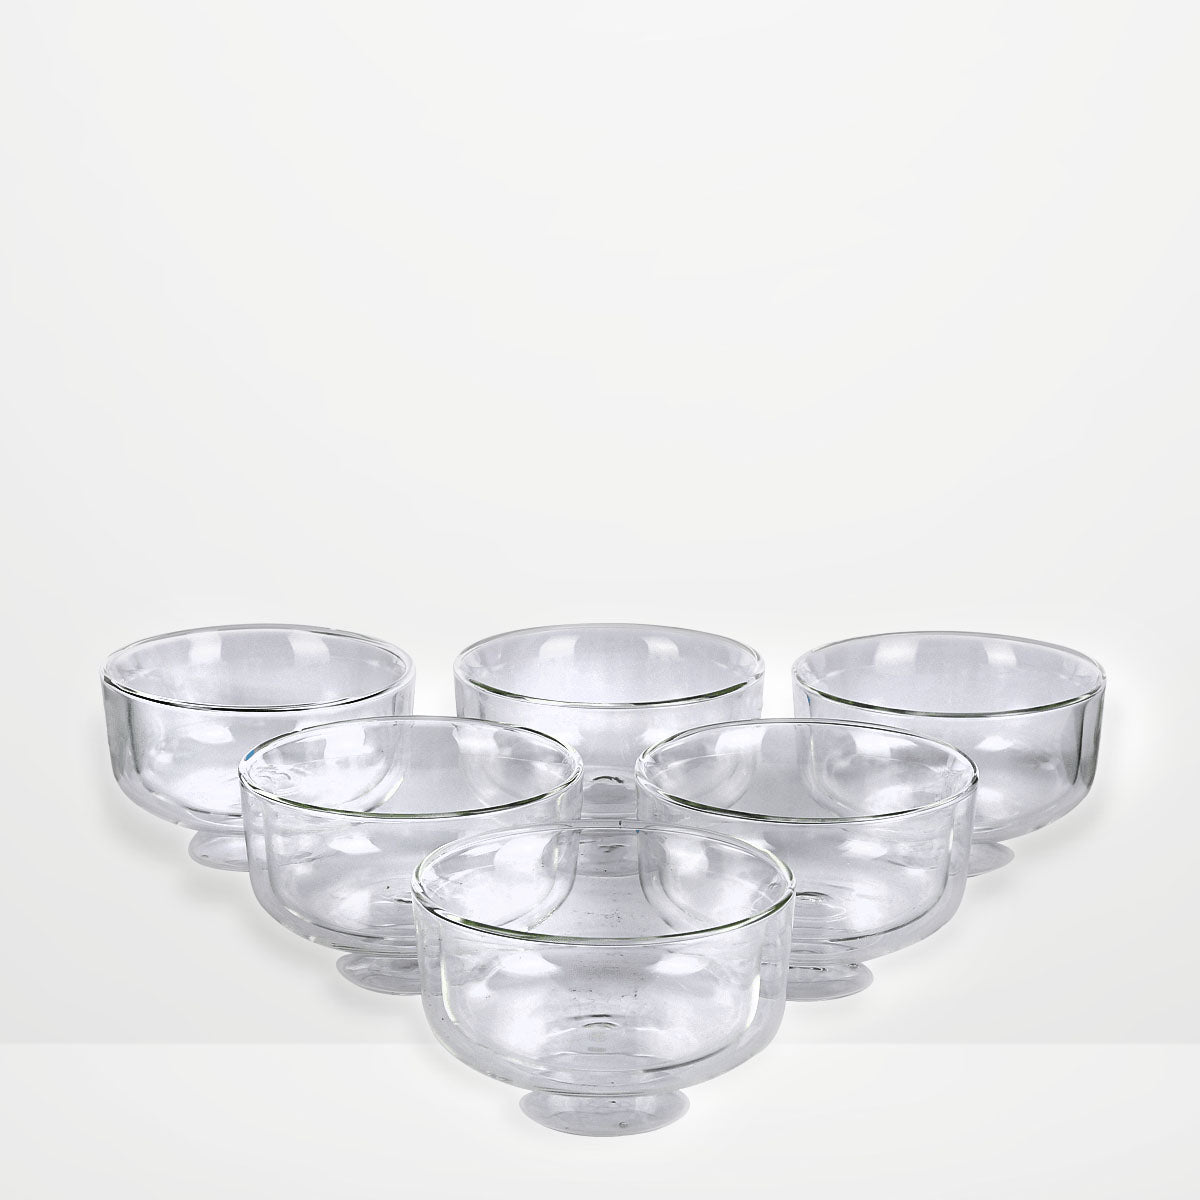 Jenaer Glas, 60404 Hot'N Cool Match bowl Set Of 6